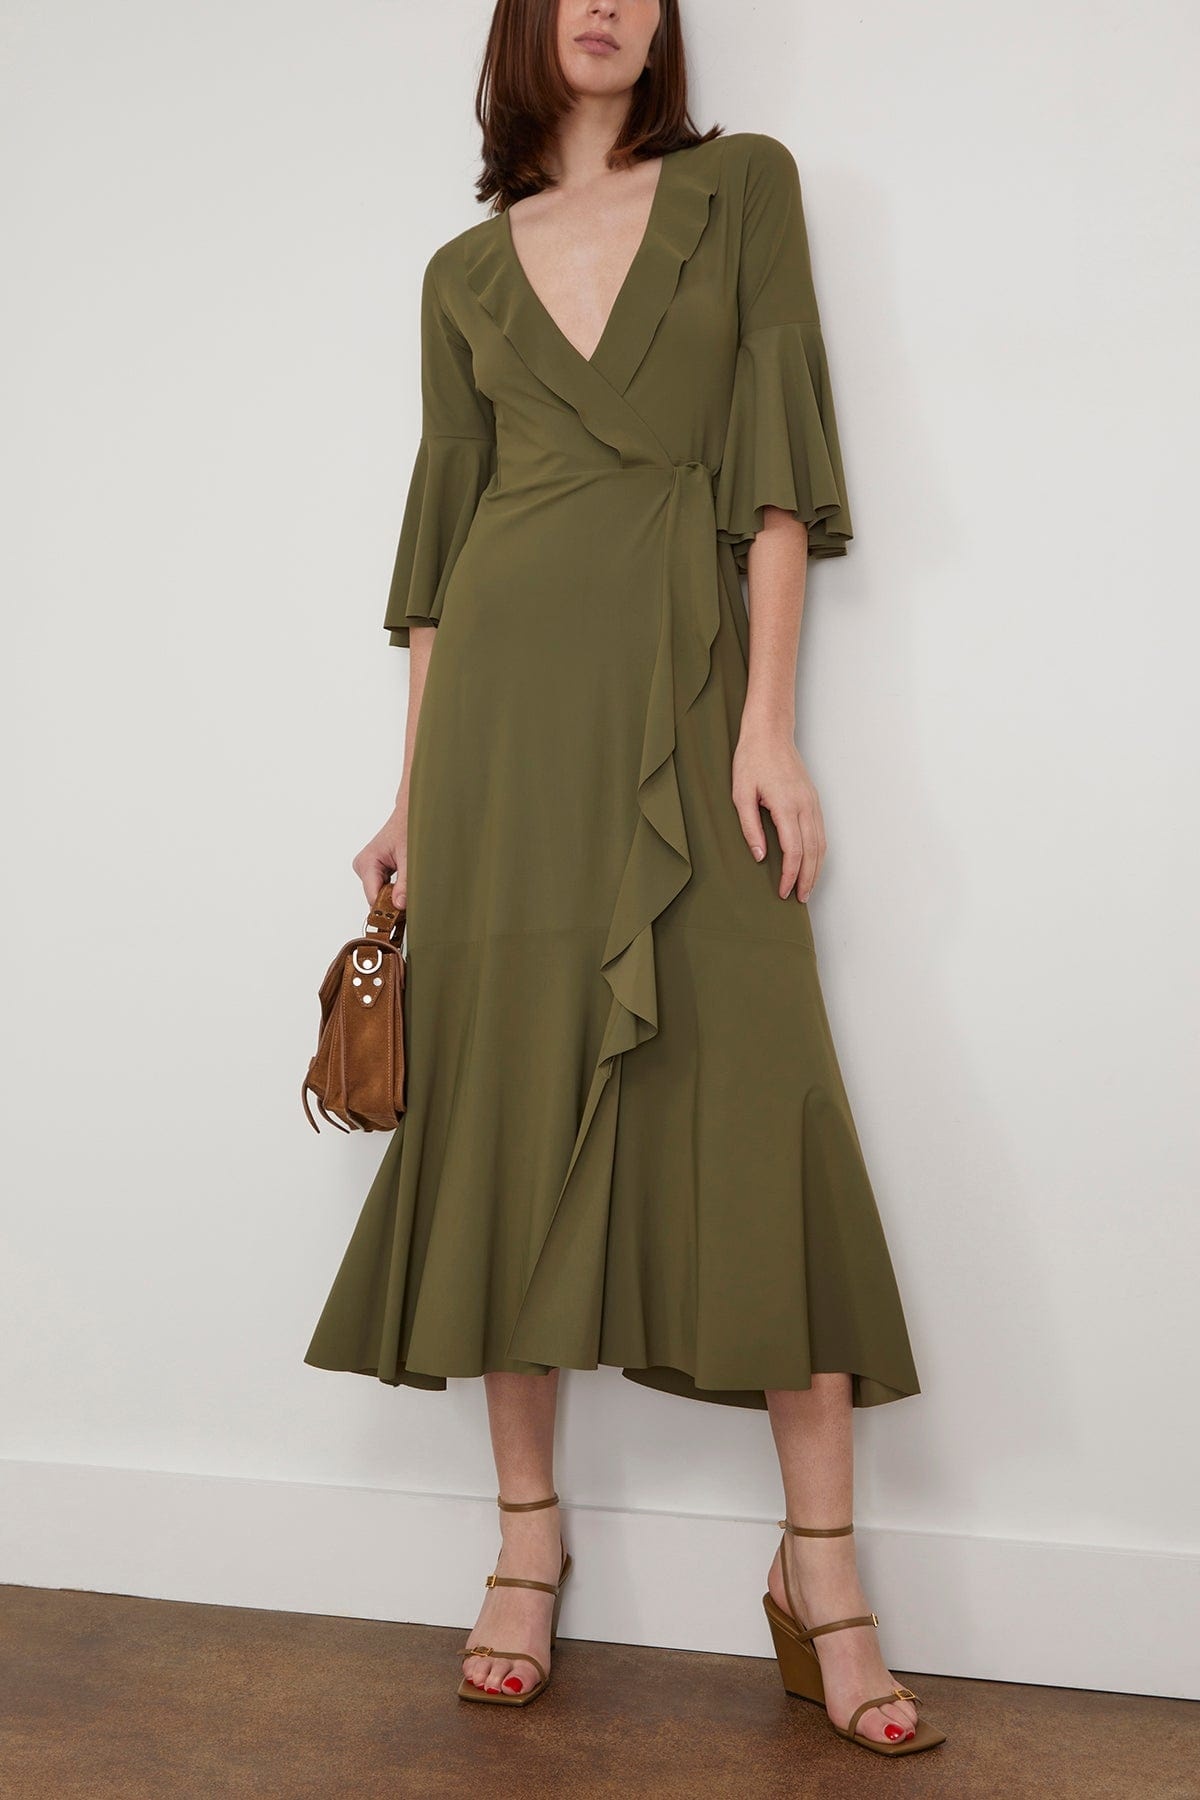 Daily Beach Dress in Dark Olive Green - 2